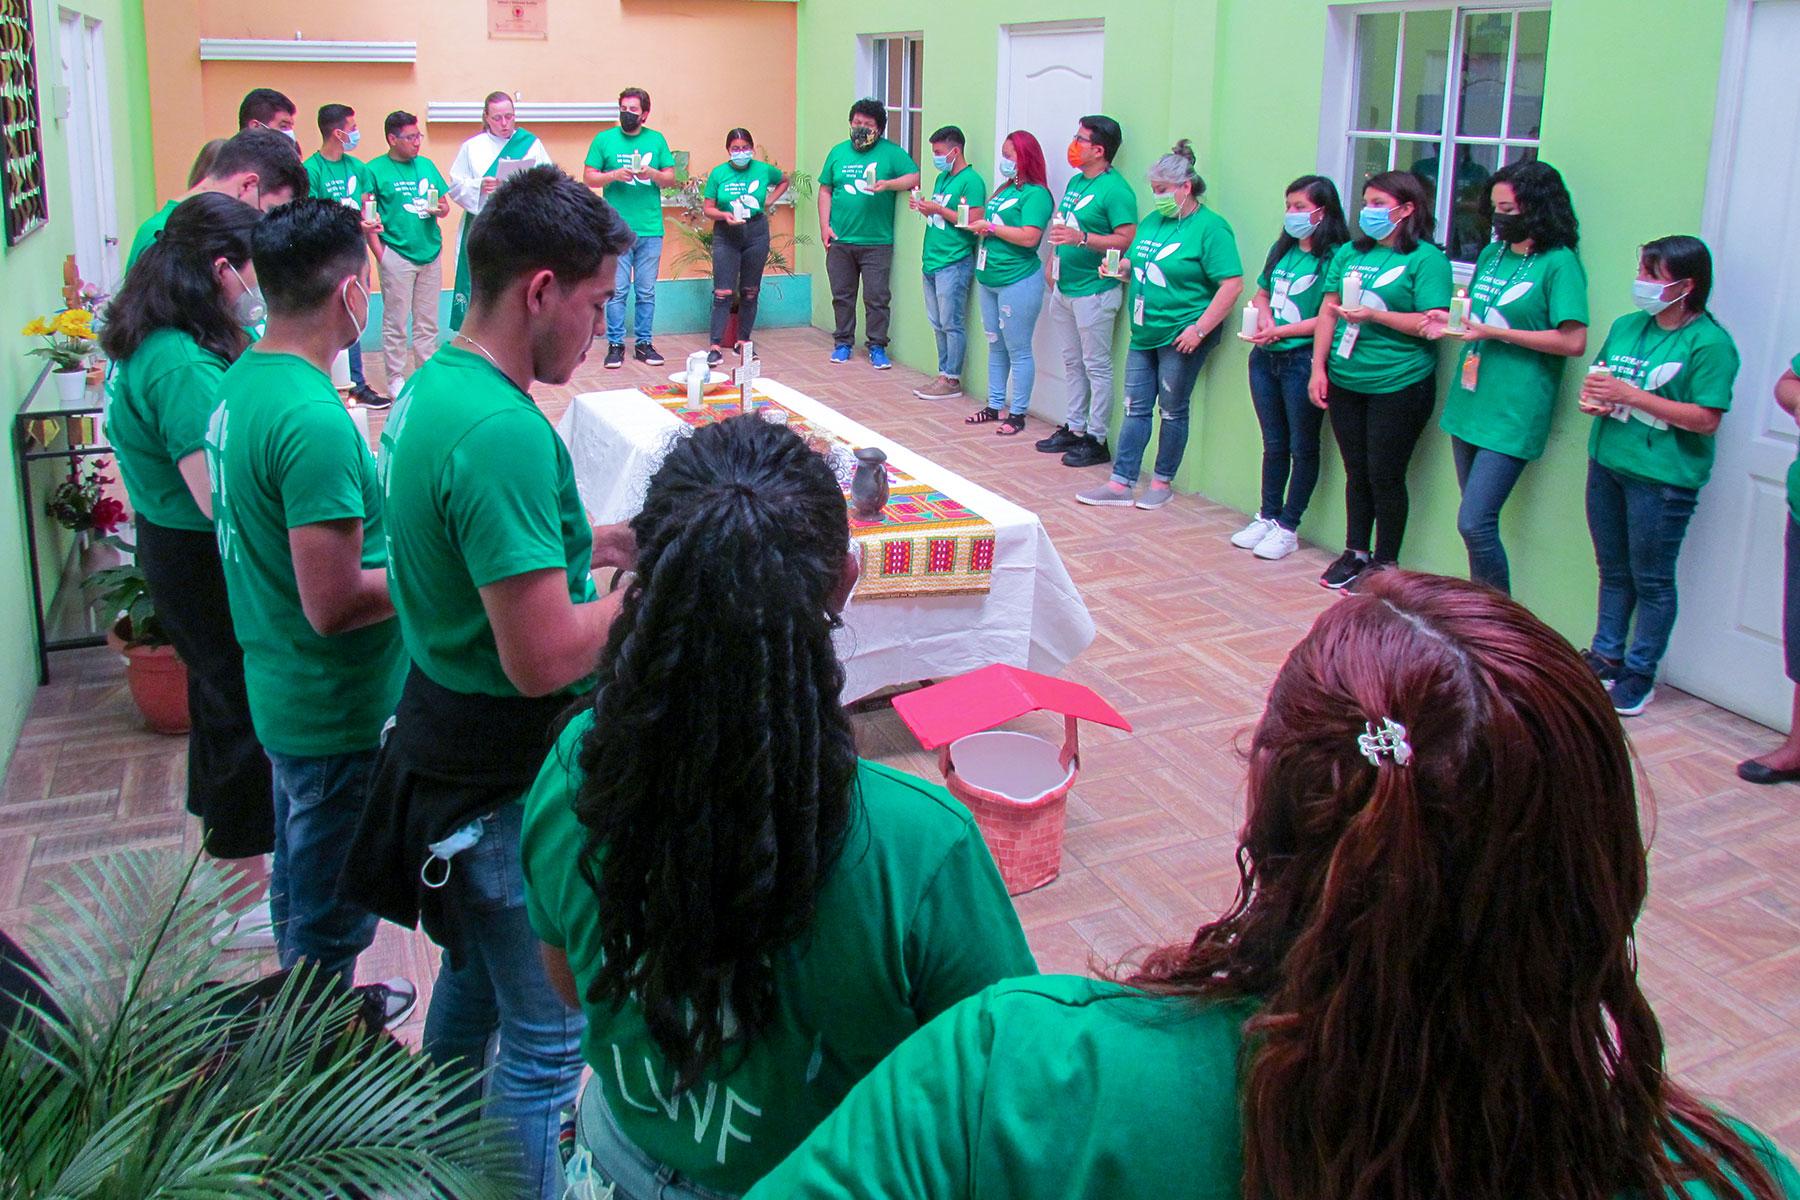 LAC regional workshop for climate justice in El Salvador